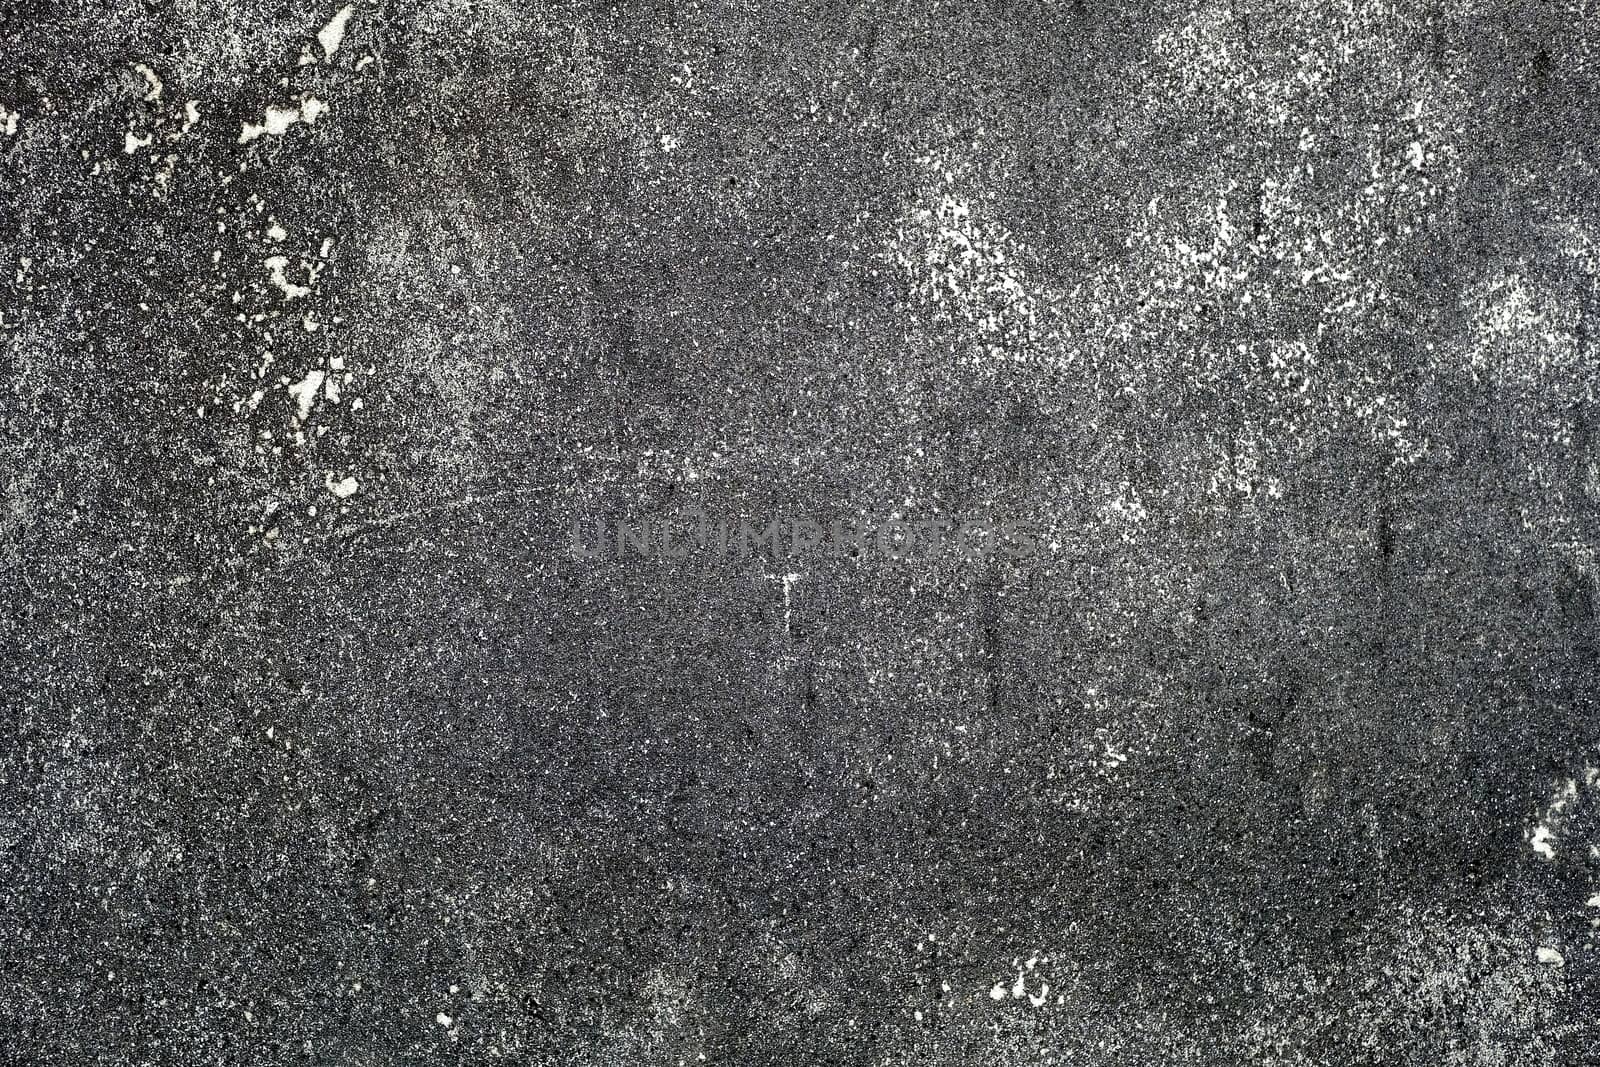 Black Grunge Concrete Wall Texture Background.